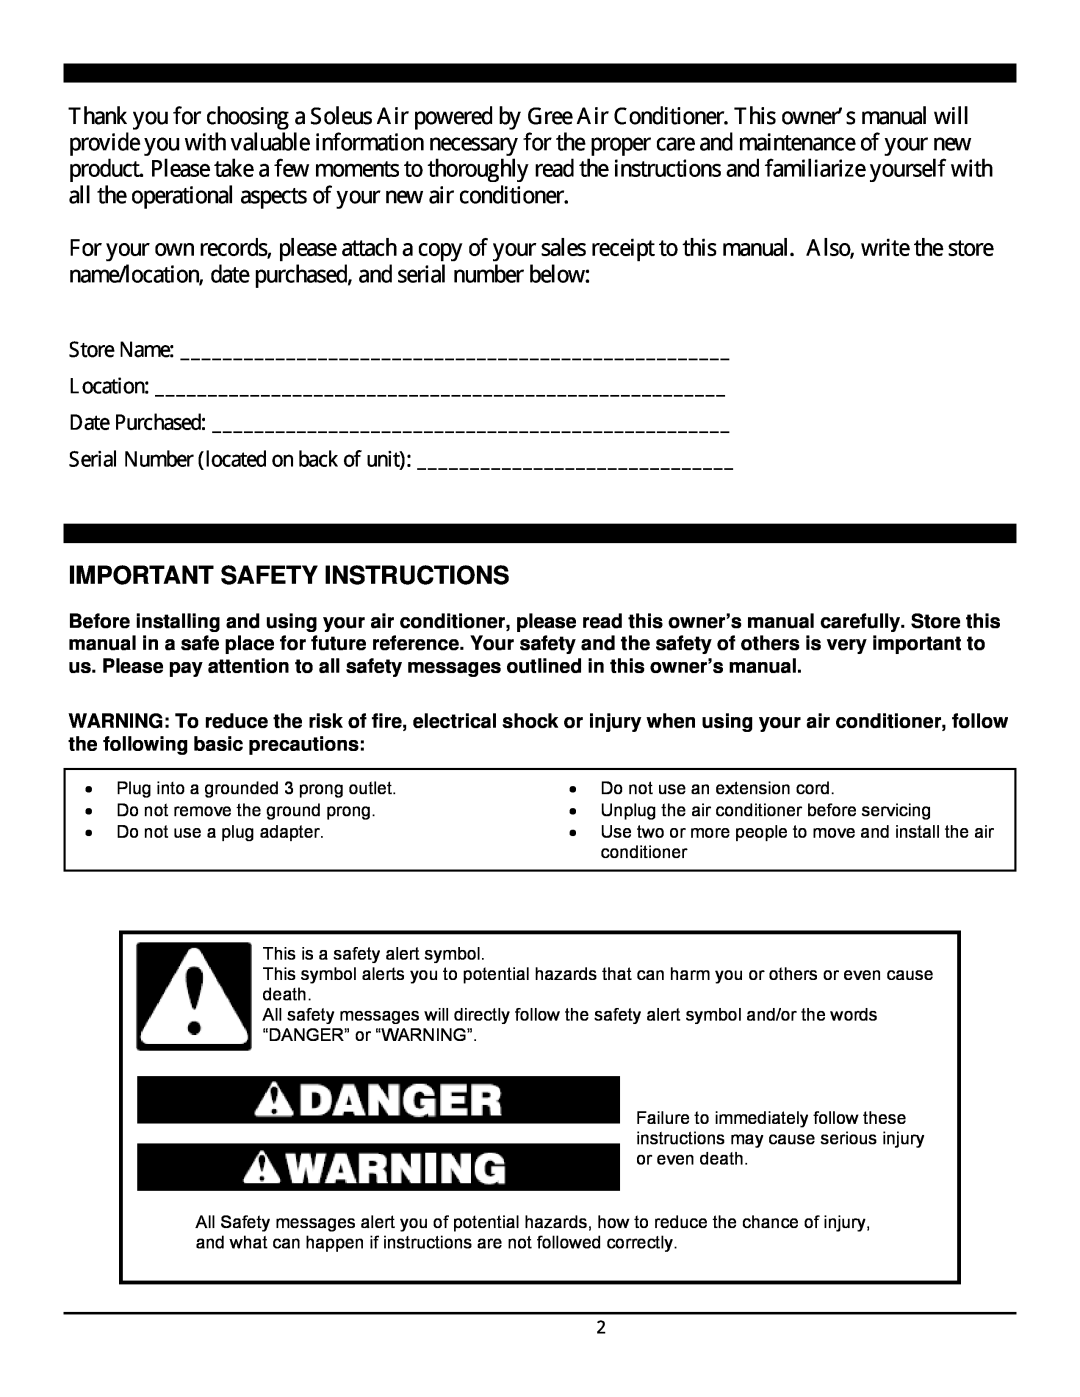 Soleus Air SG-TTW-10ESE manual Important Safety Instructions 